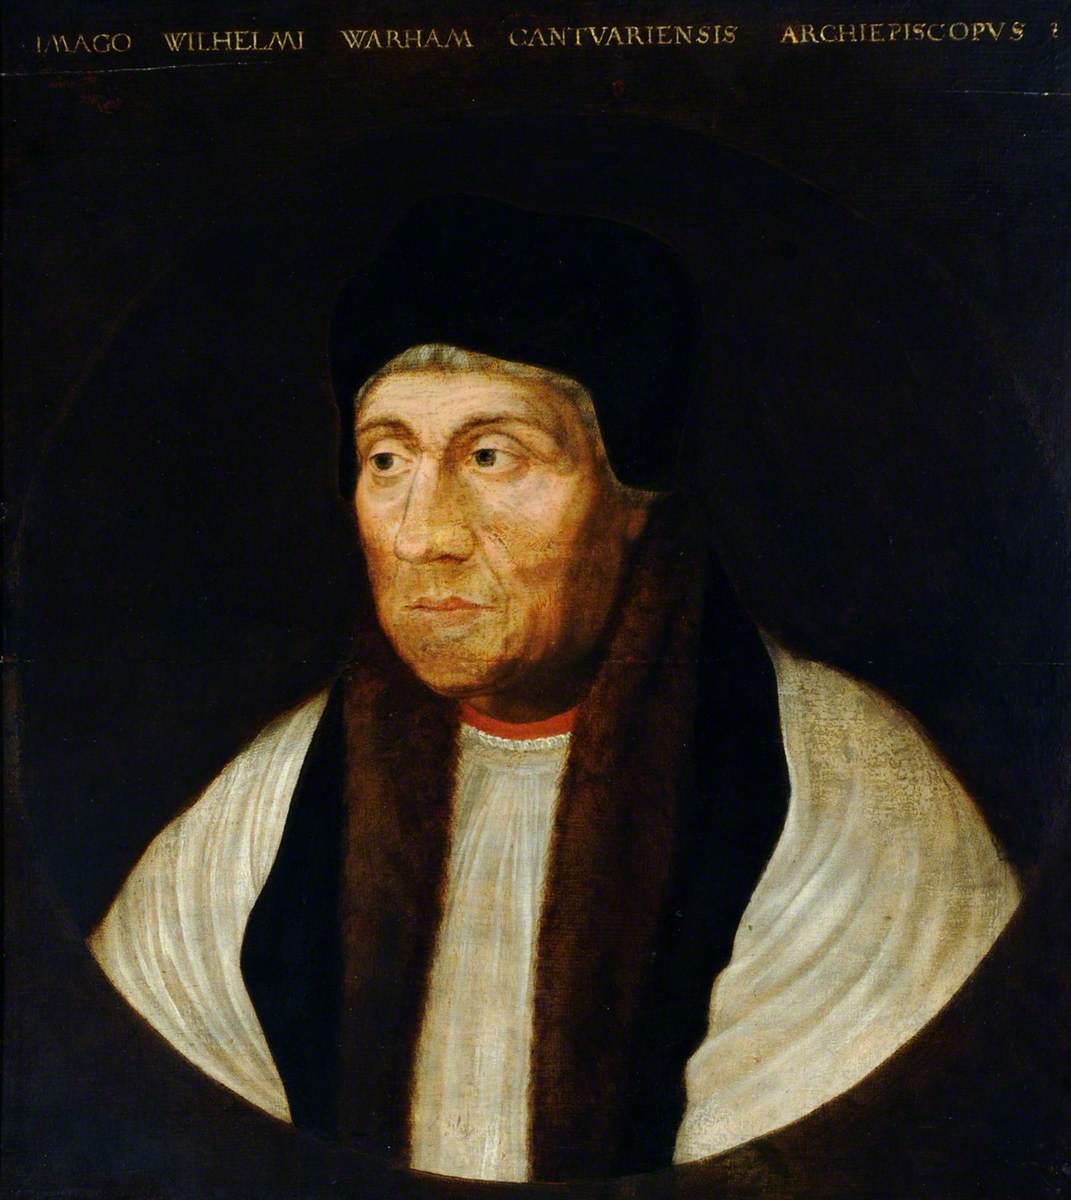 William Warham (1450?–1532), Archbishop of Canterbury